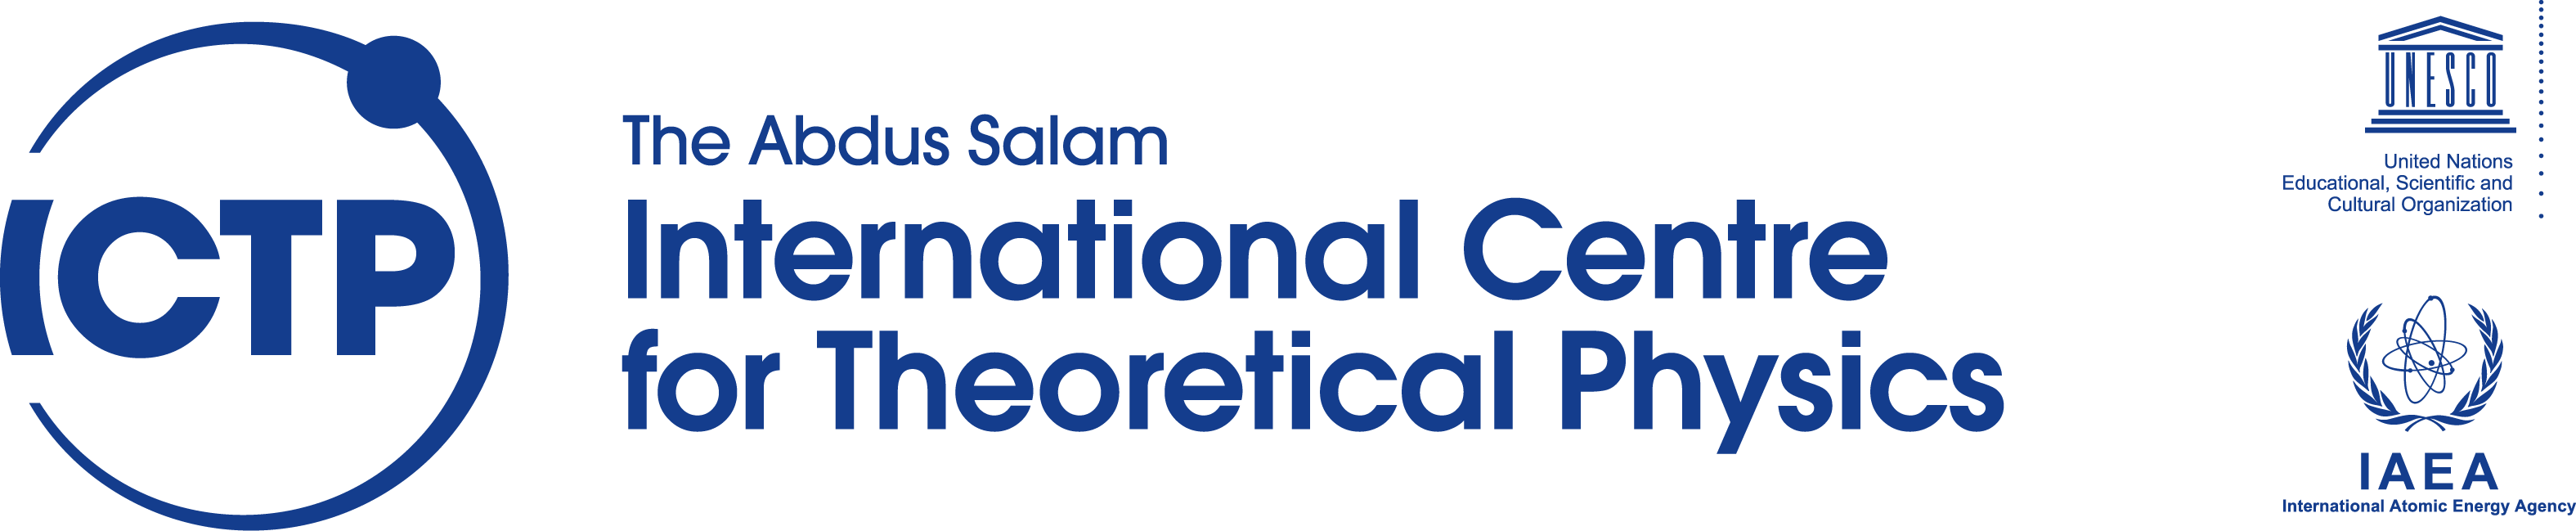 Abdus Salam International Centre for Theoretical Physics